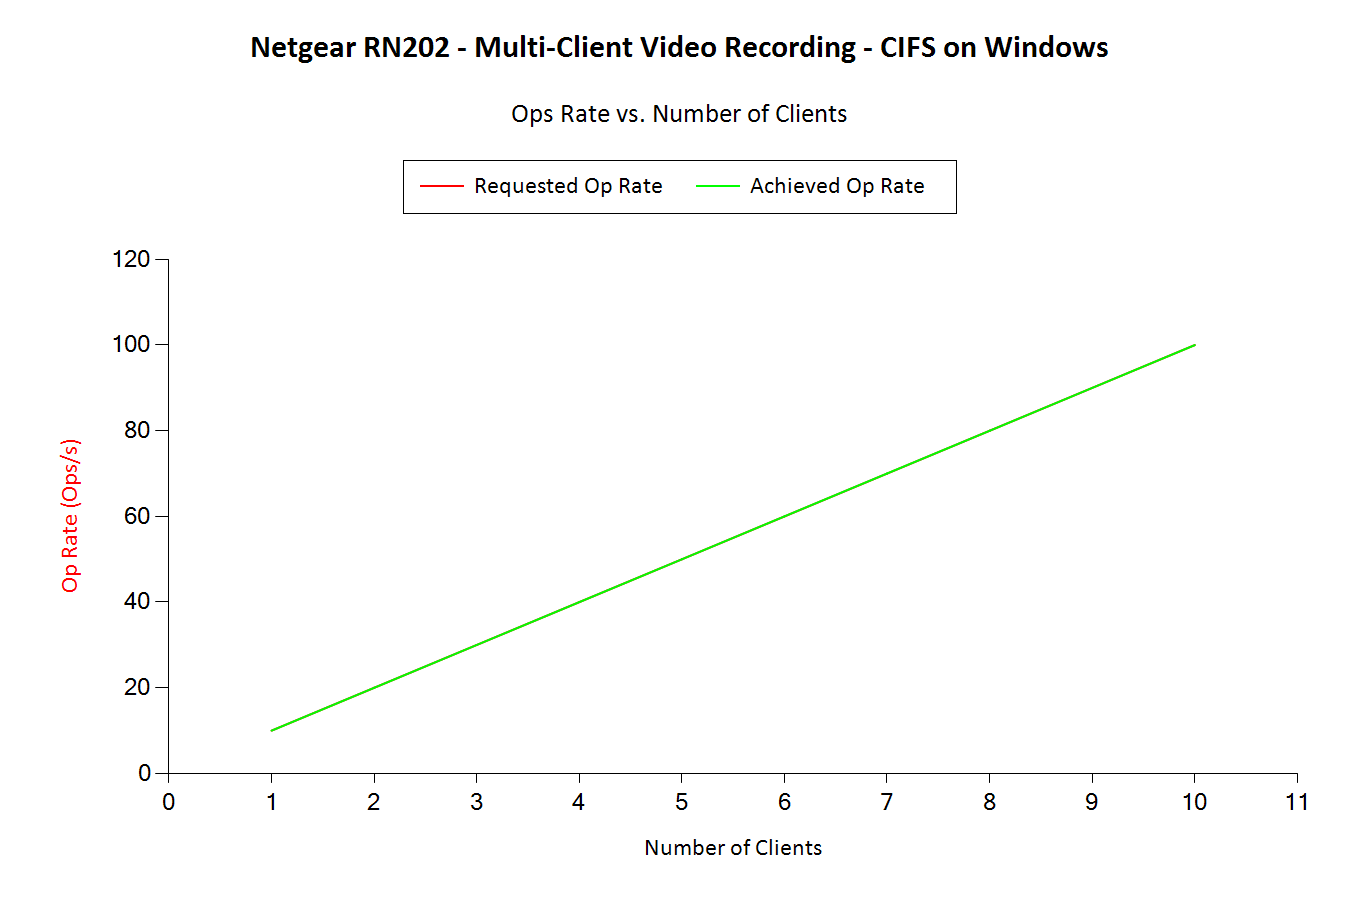 Video Recording - Op Rates